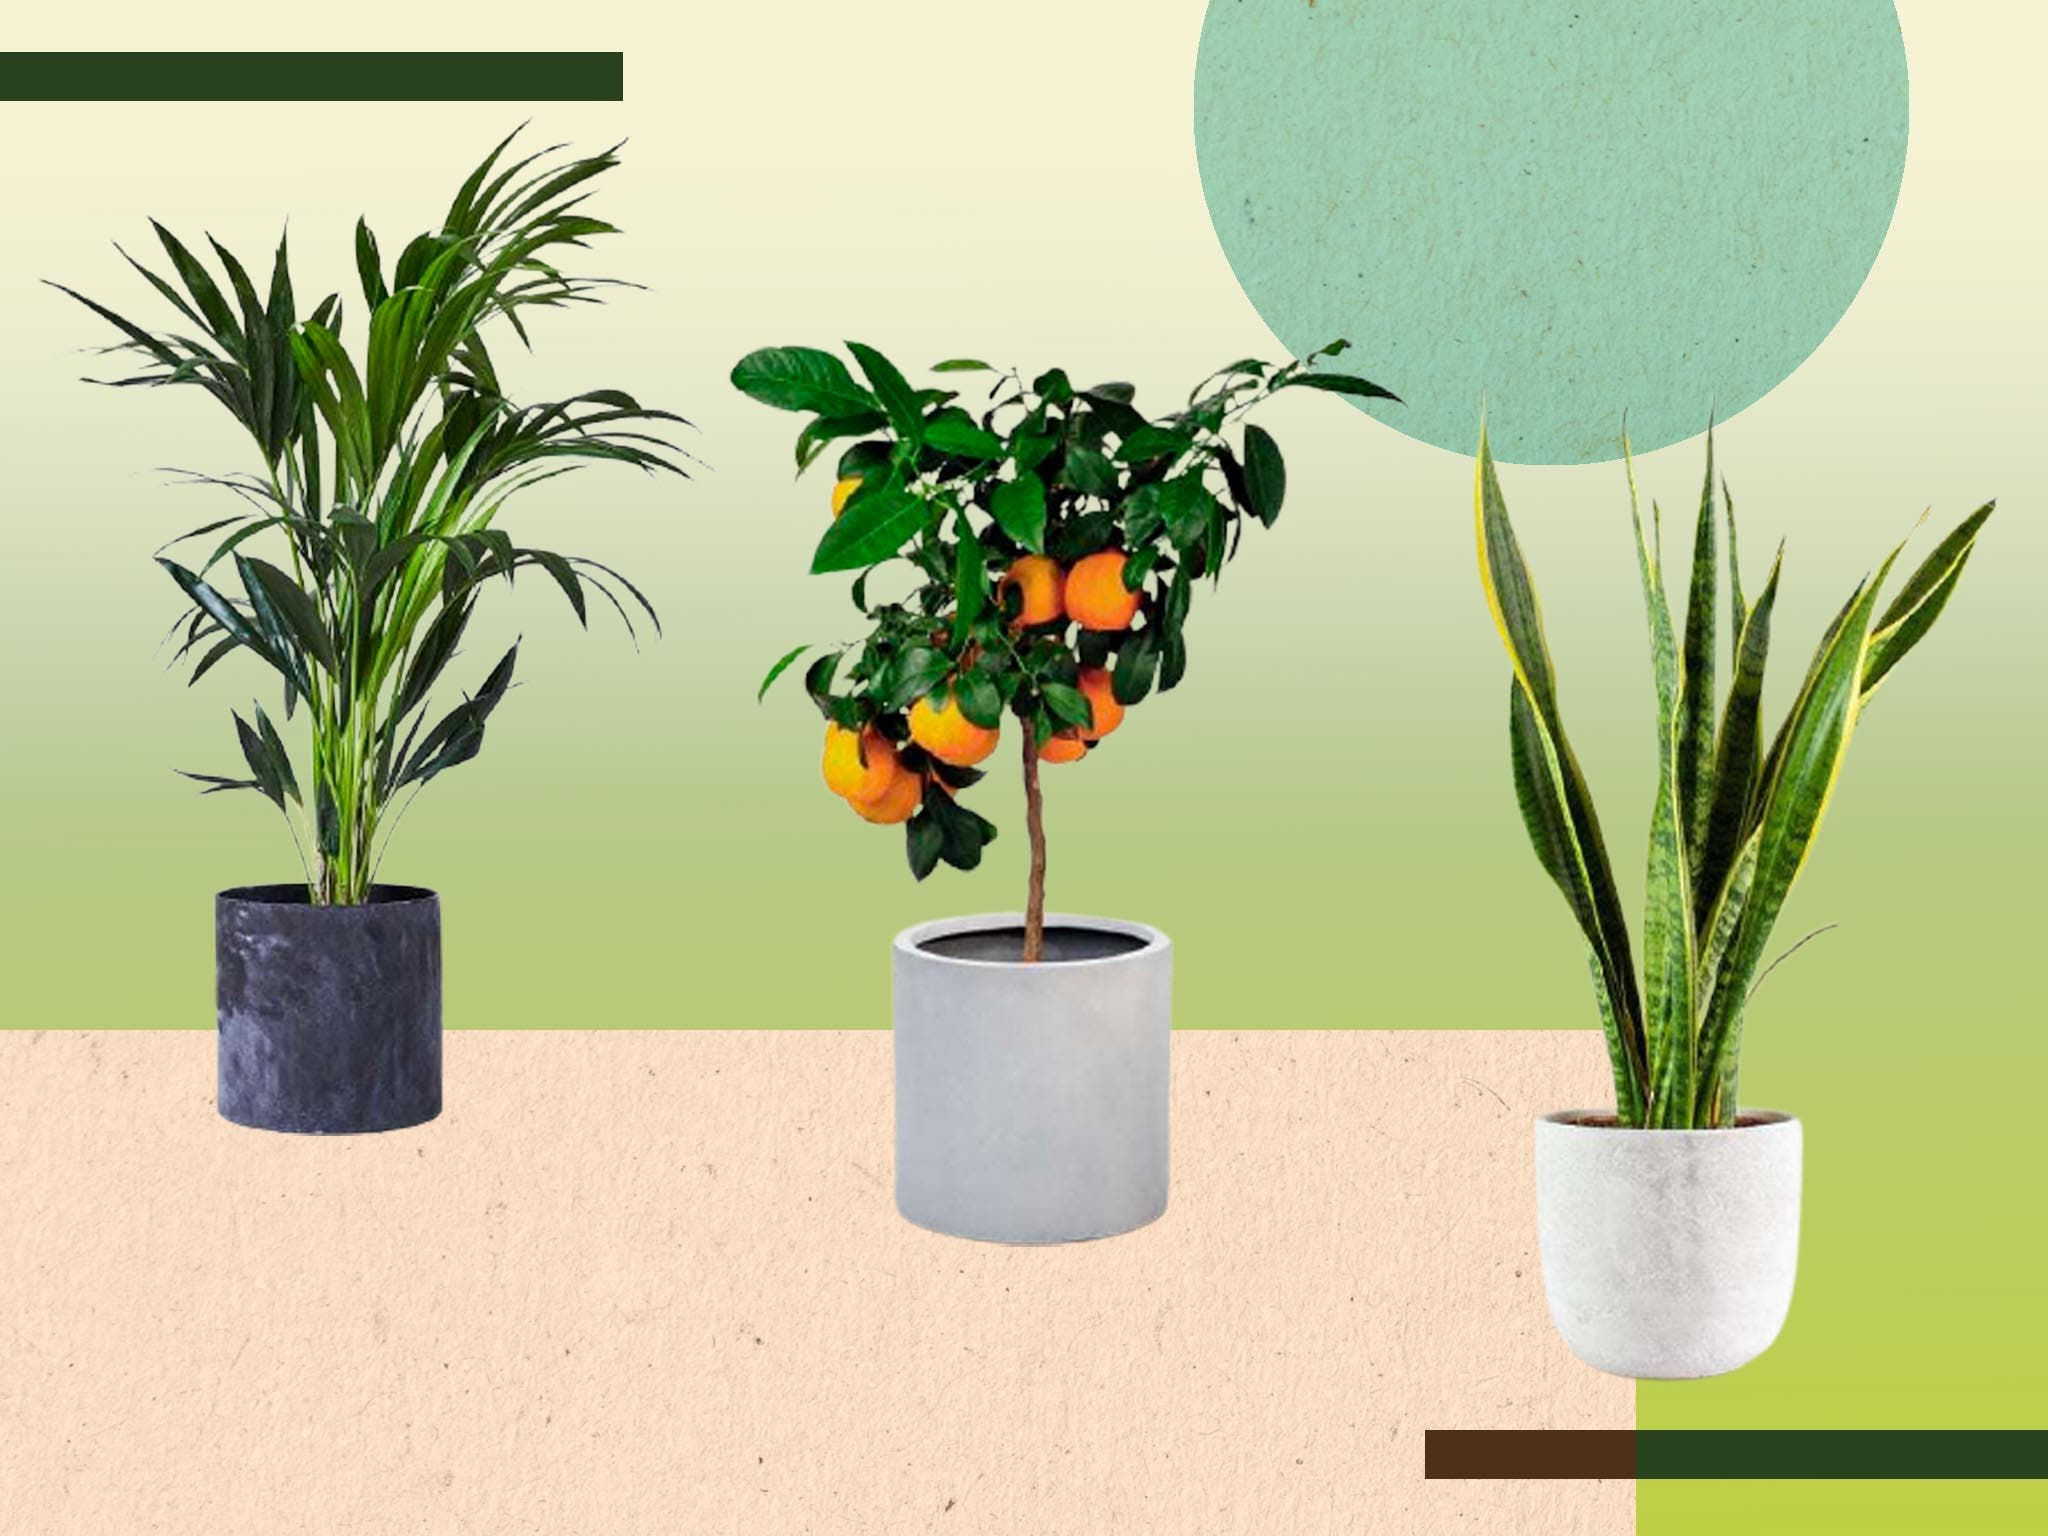 best places to buy plants 2022: online garden centres, nurseries